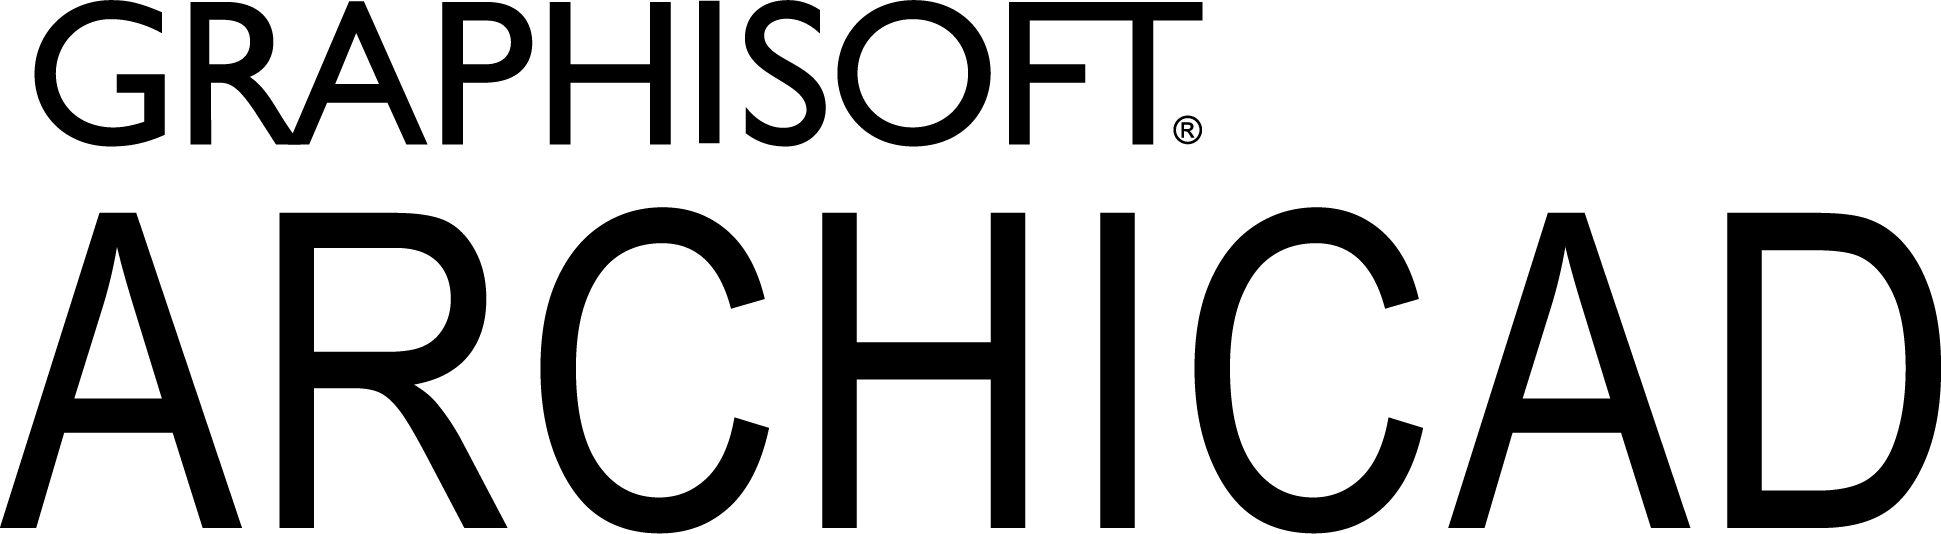 ArchiCAD GS logo (1)